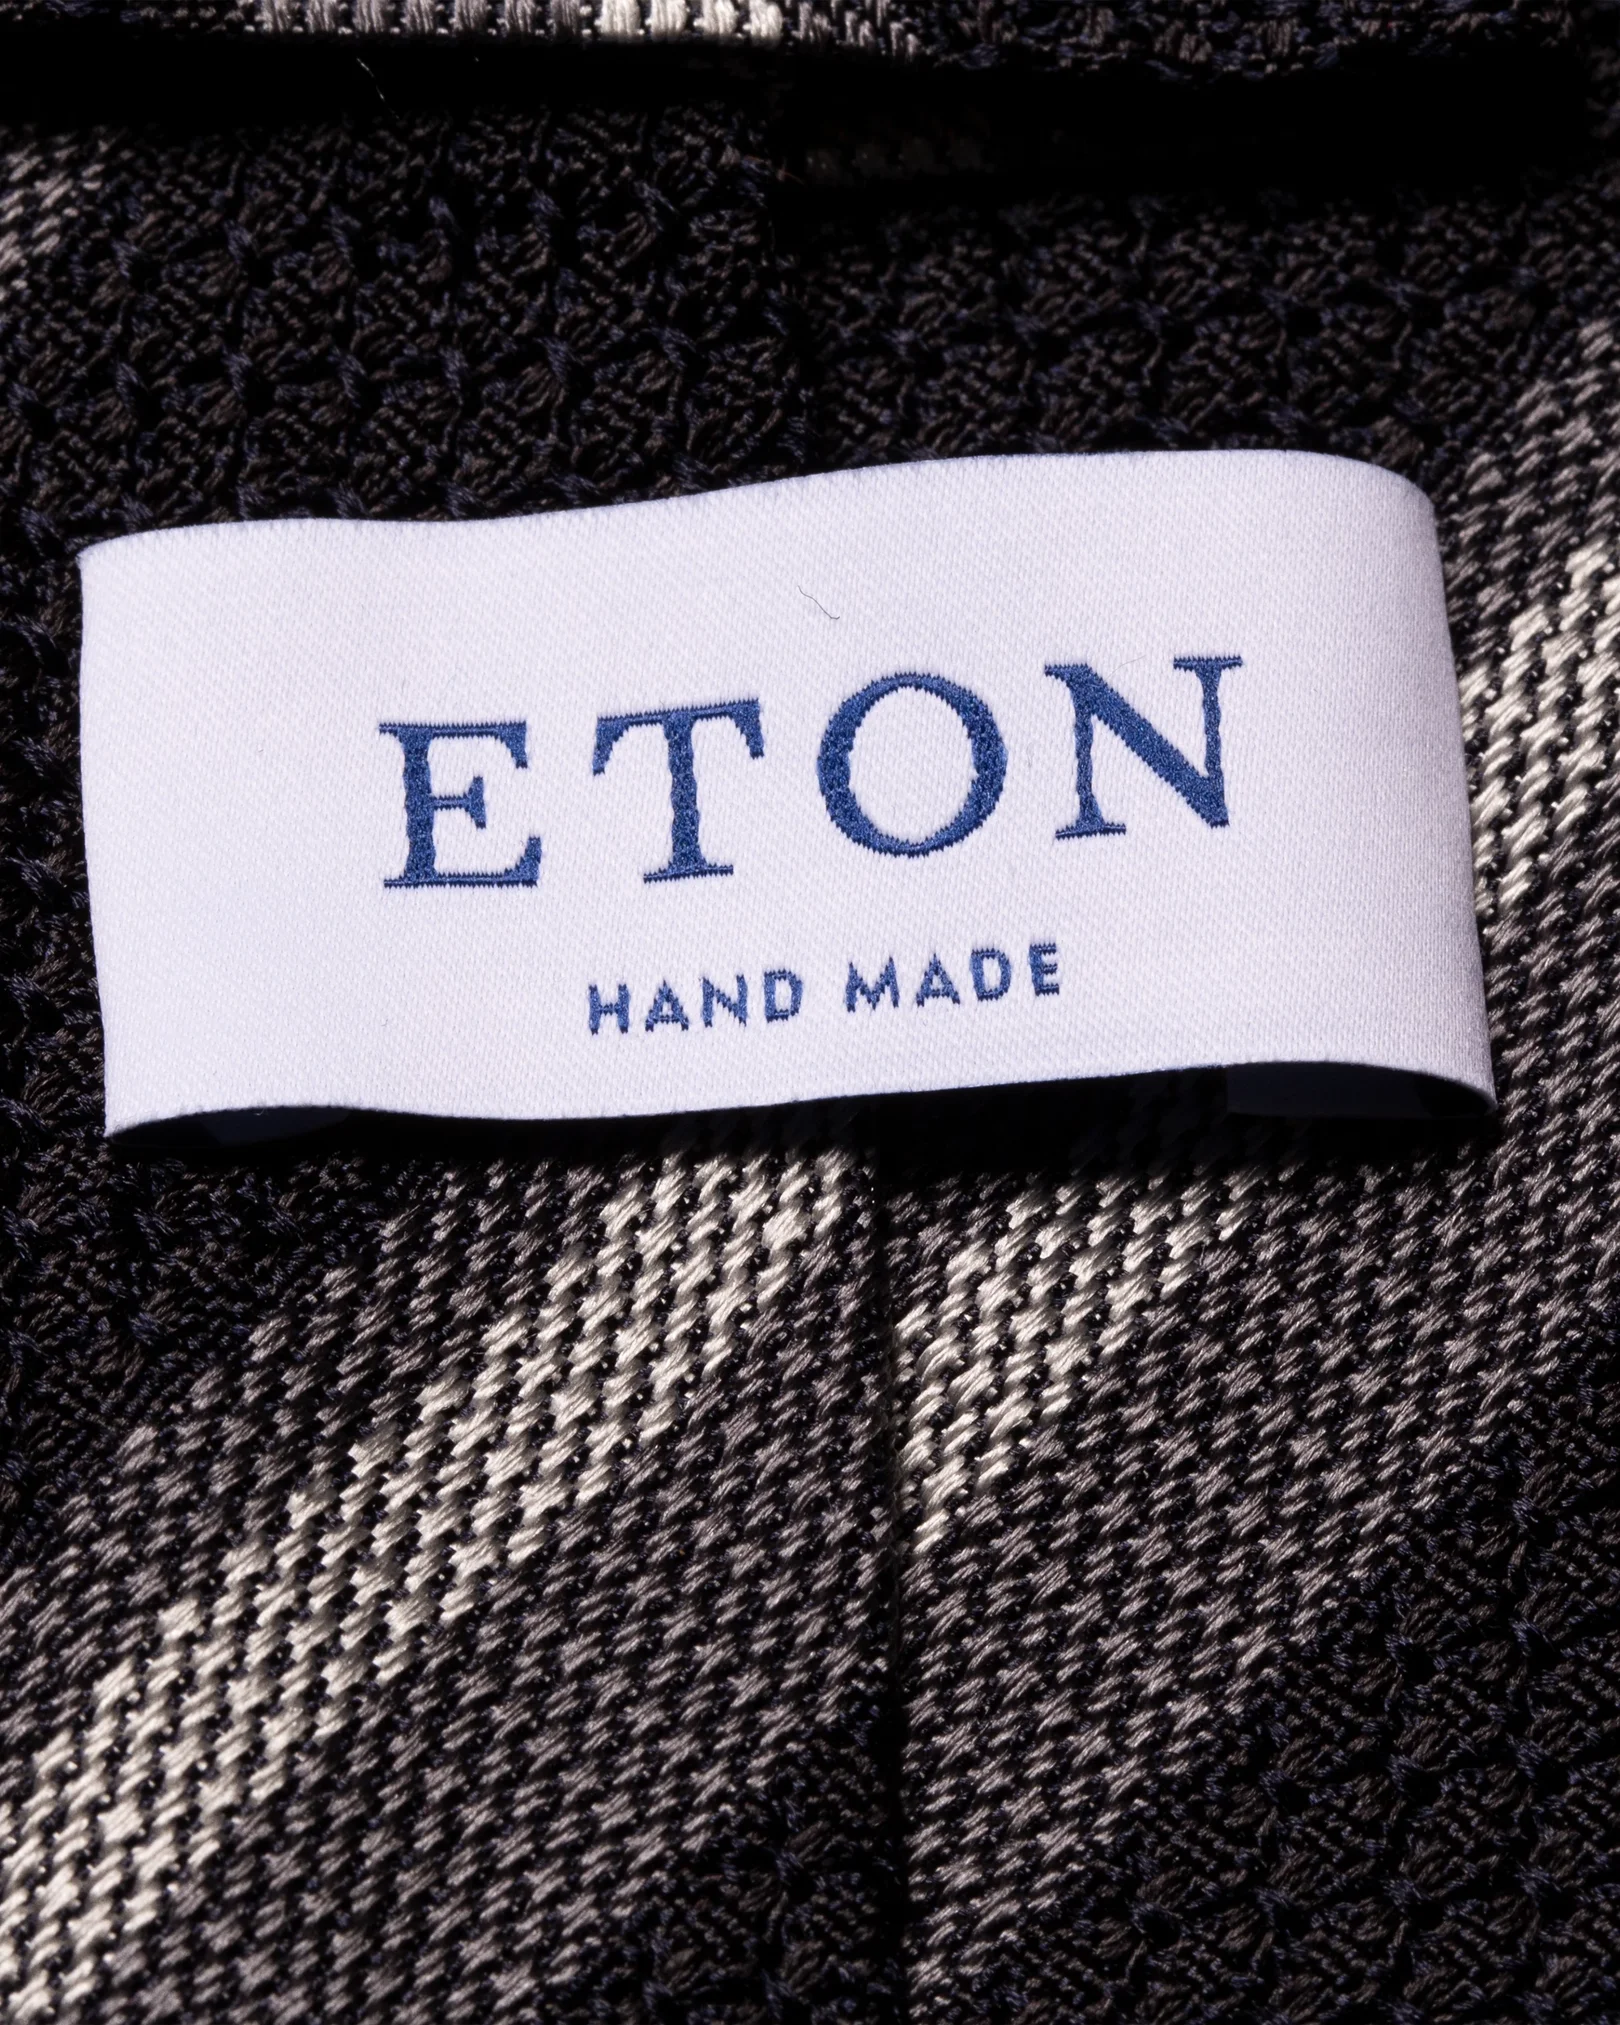 Eton - navy blue striped grenadine tie